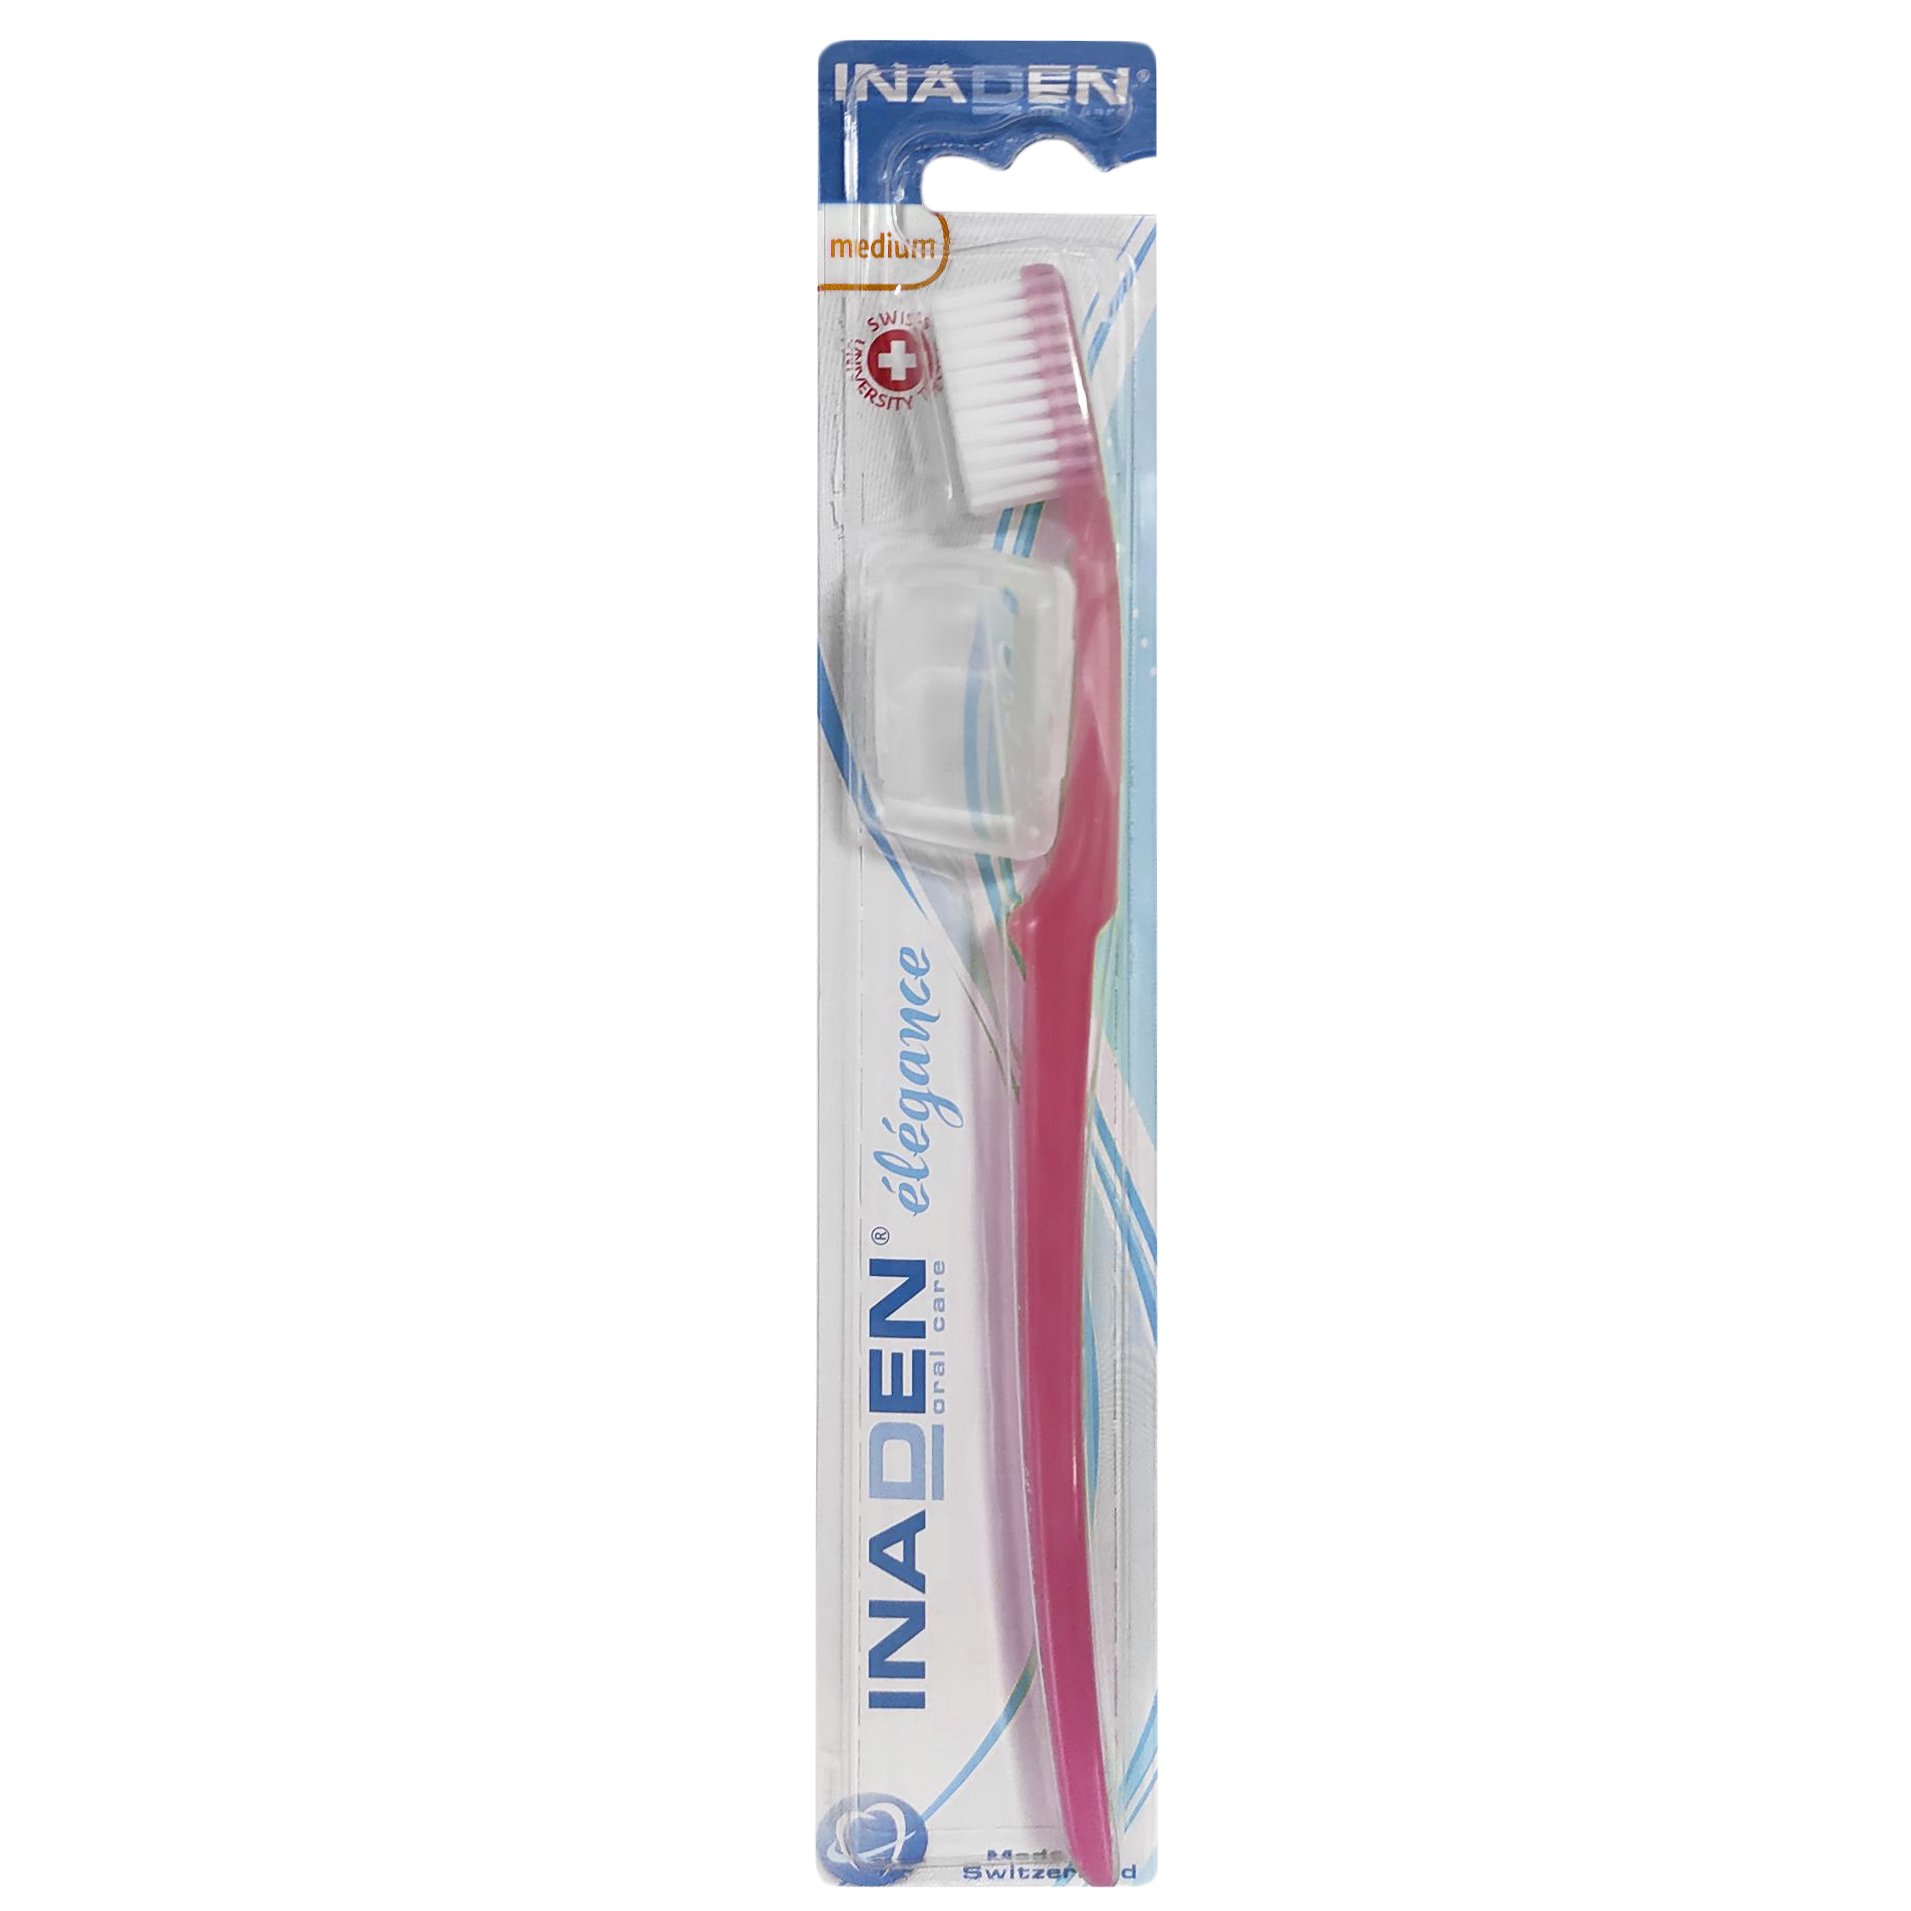 Inaden Elegance Medium Toothbrush Μέτρια Οδοντόβουρτσα για Βαθύ Καθαρισμό με Εργονομικό Σχήμα 1 Τεμάχιο – Ροζ